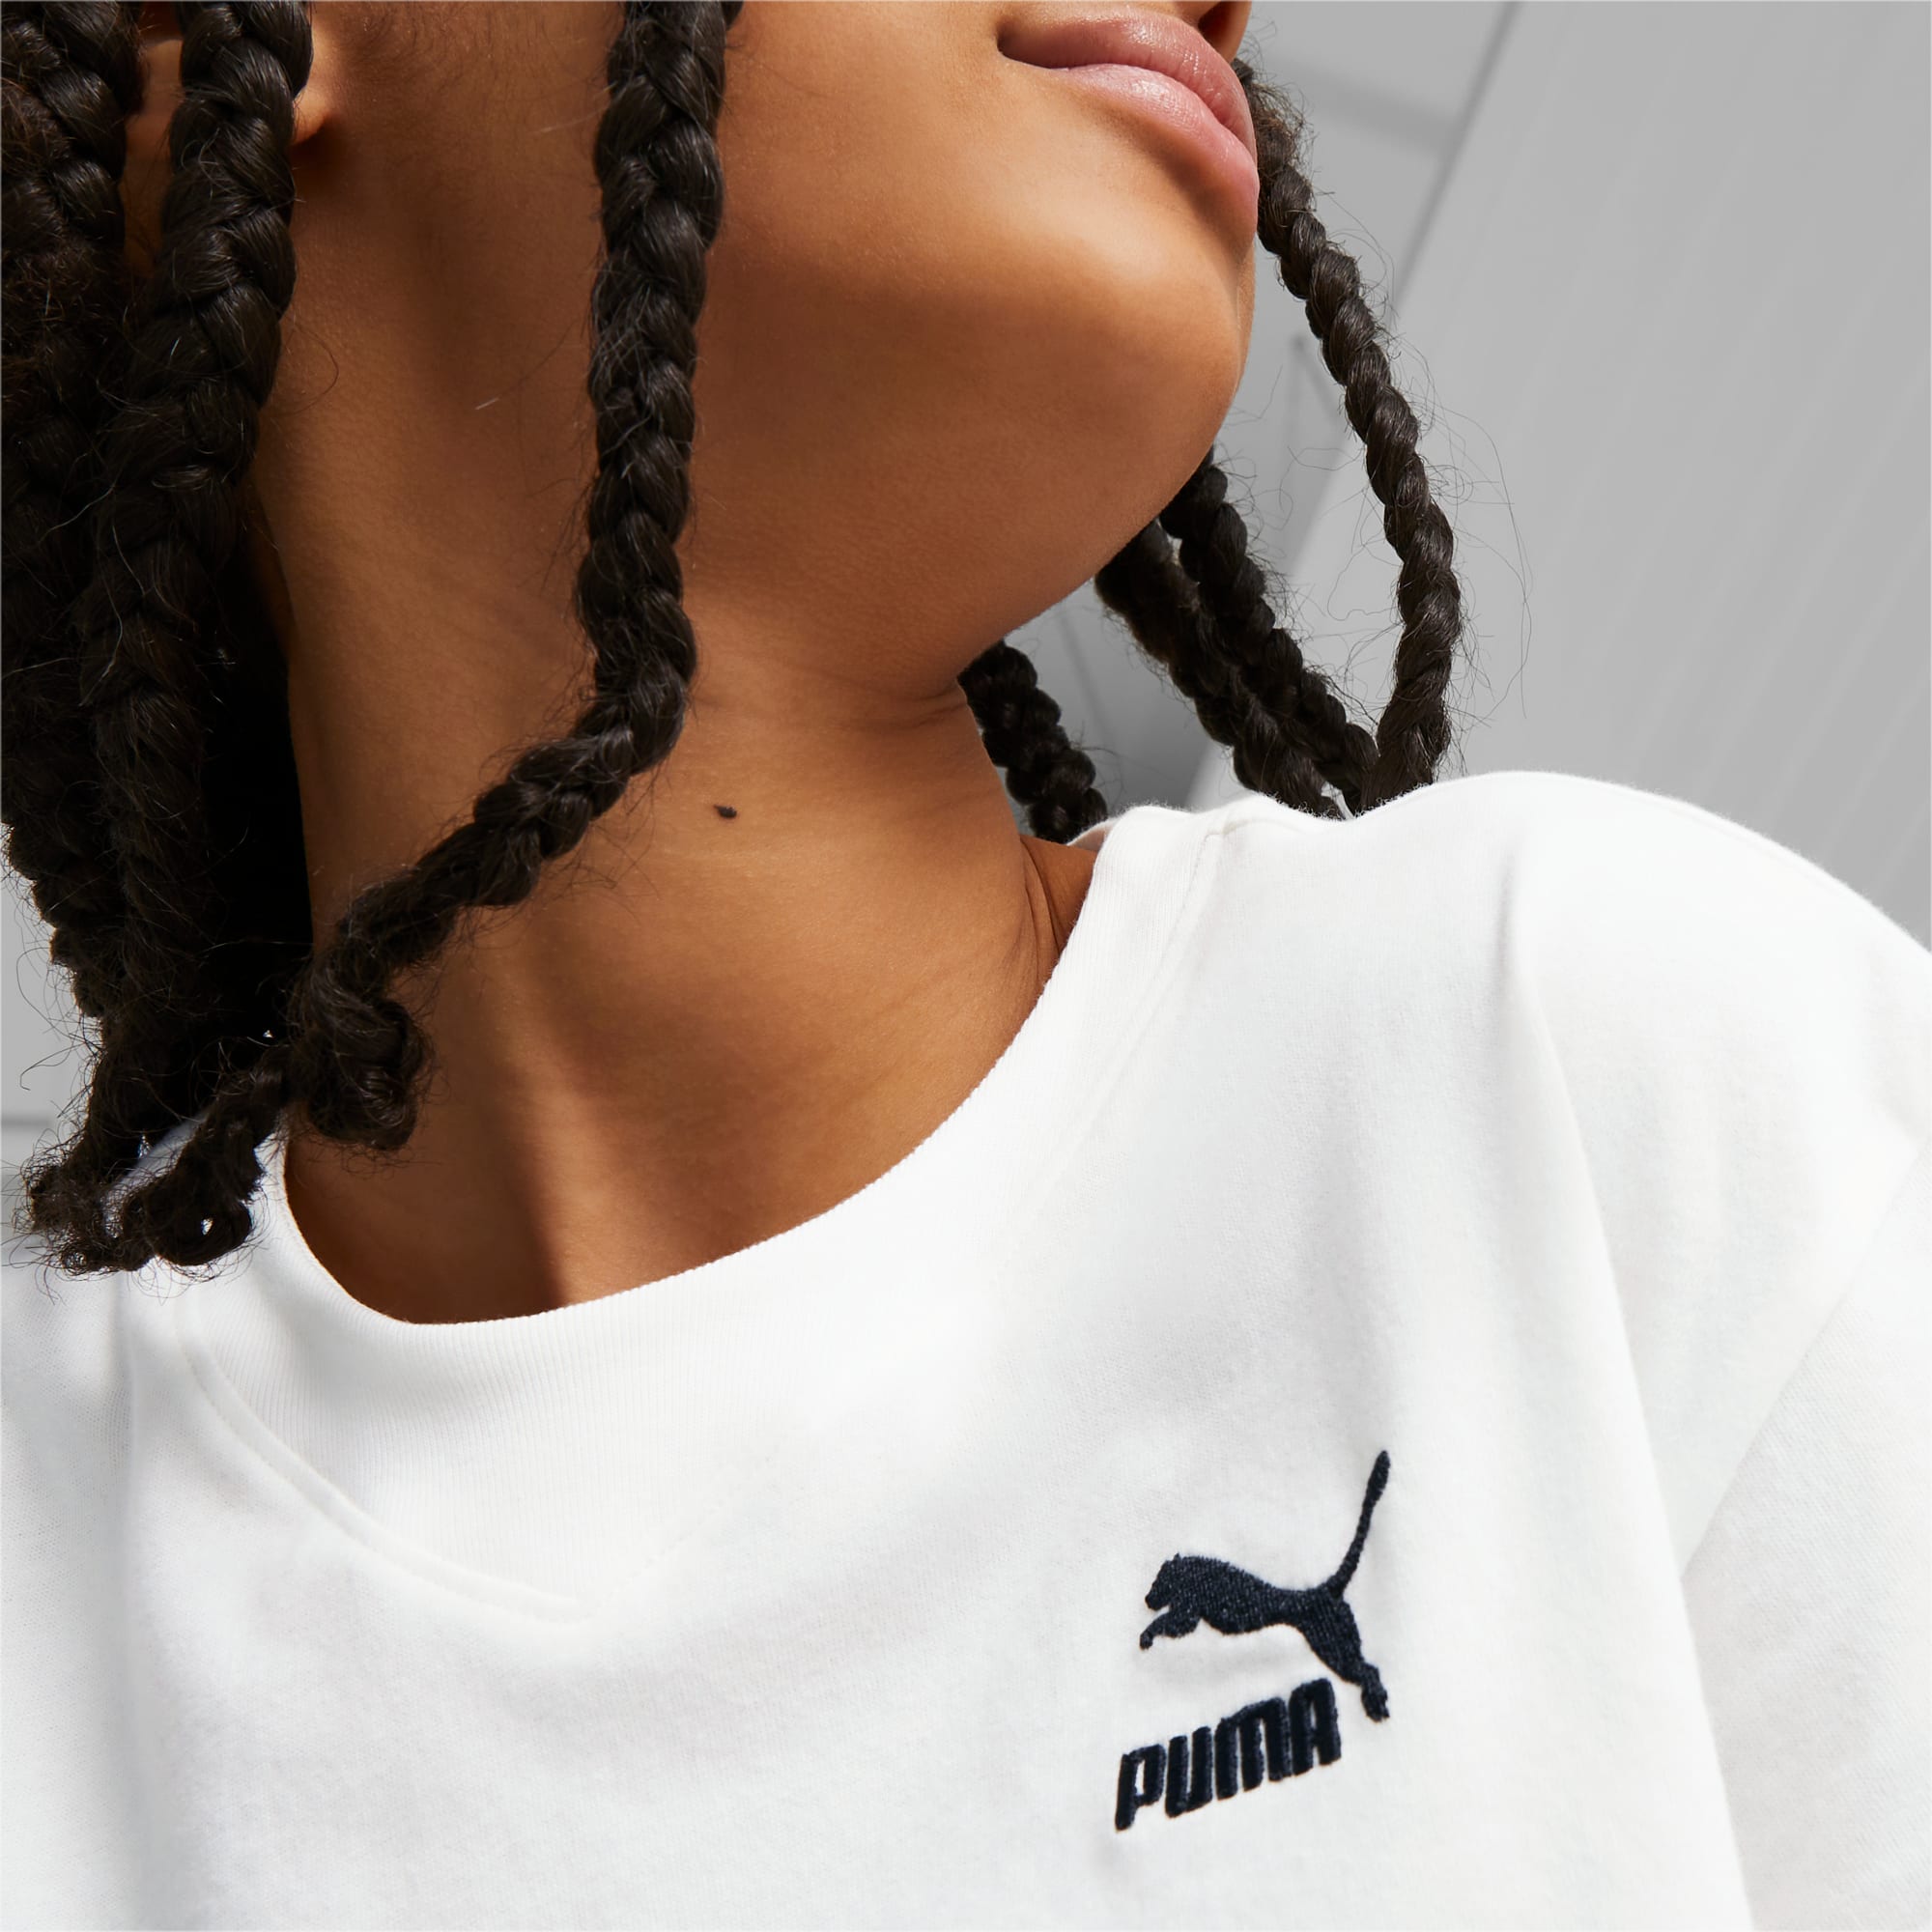 PUMA Classics T-Shirt Jugend Für Kinder, Weiß, Größe: 152, Kleidung